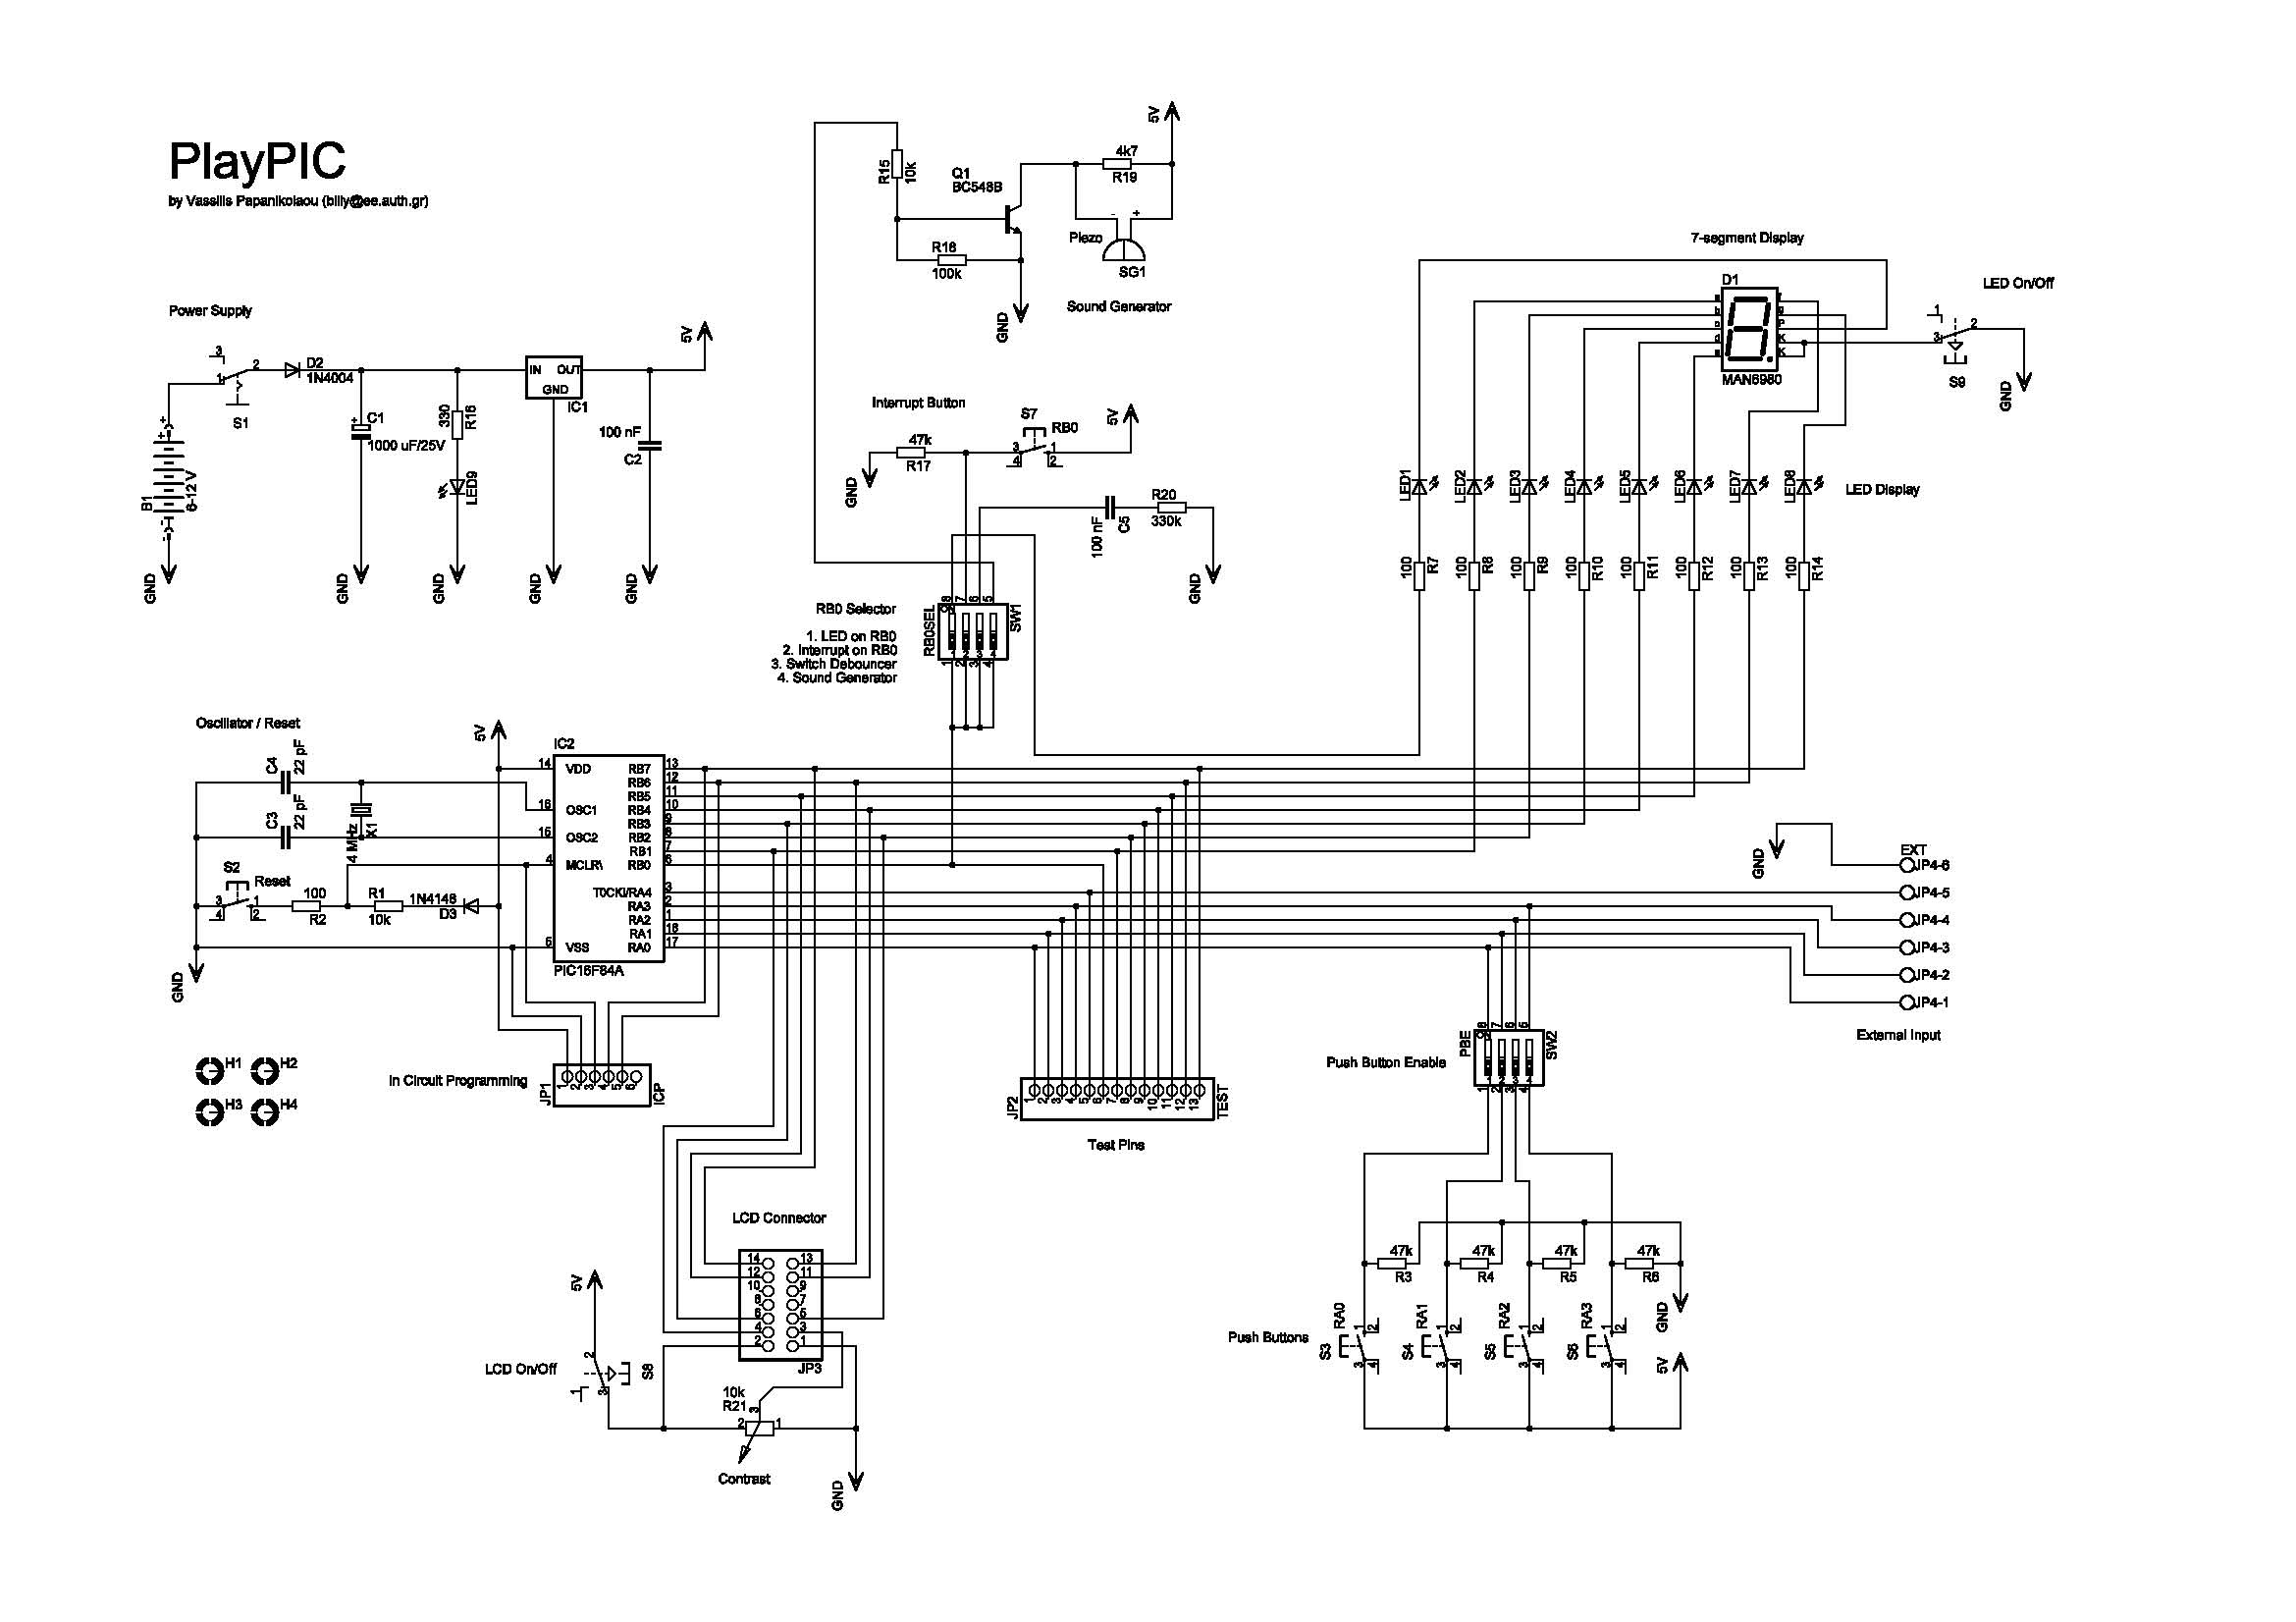 PlayPIC - учебная плата с микроконтроллером PIC16F84A honda mini trail 70 wiring schematic 